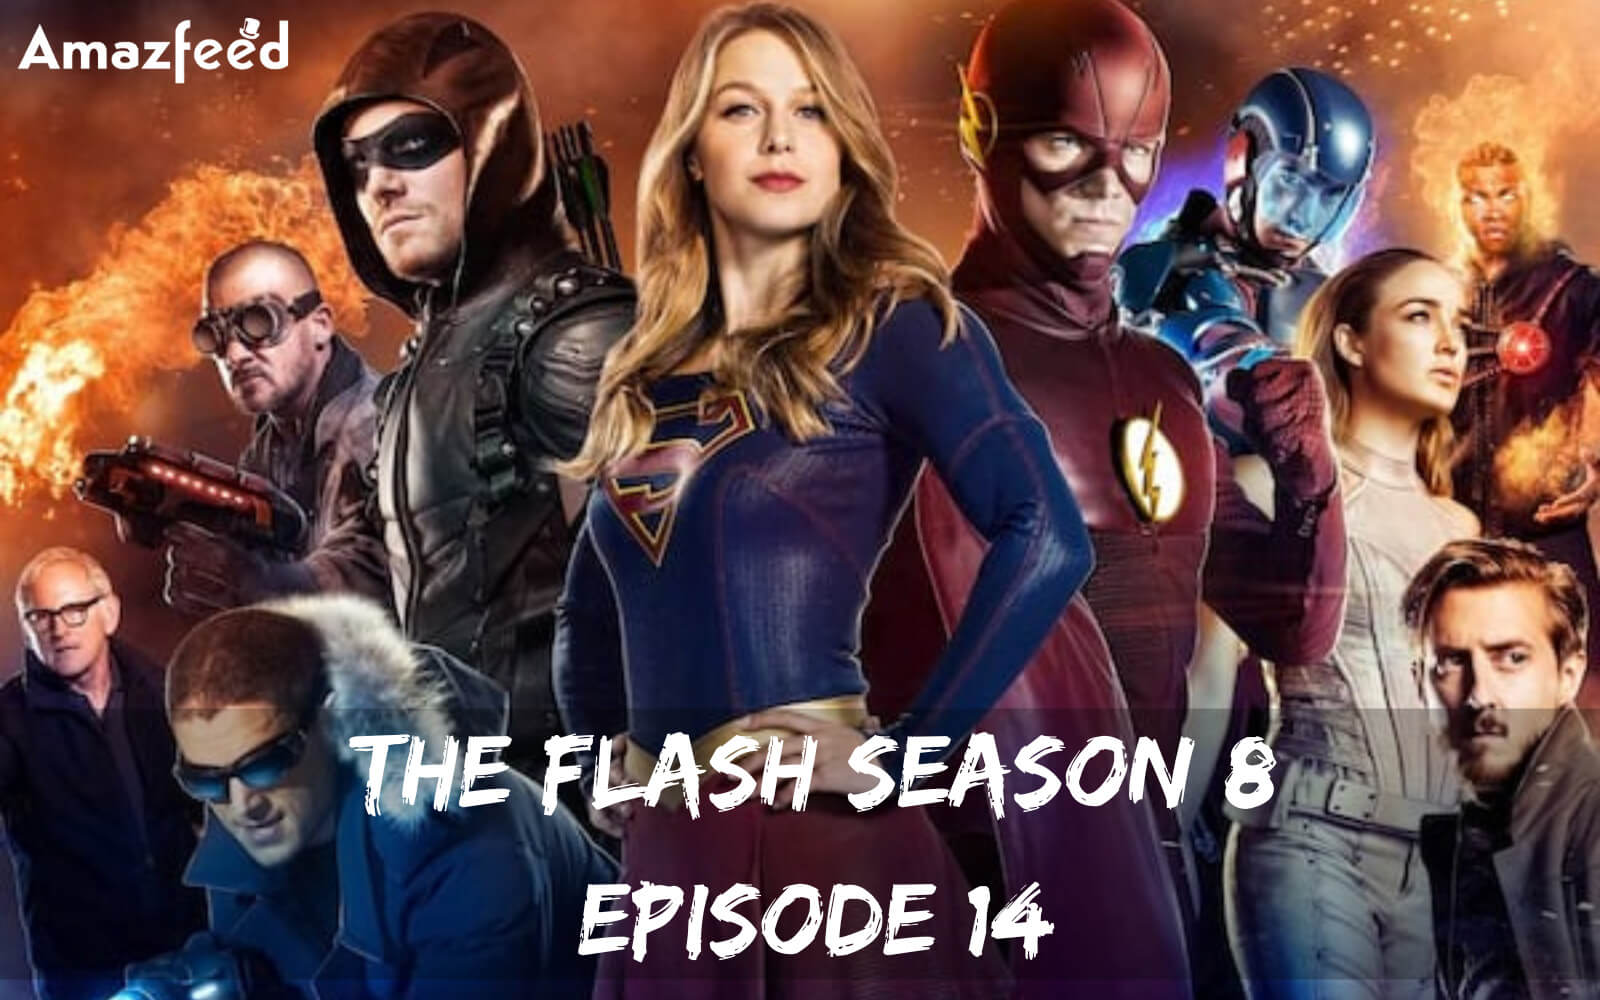 The Flash season 8 episode 14 release date